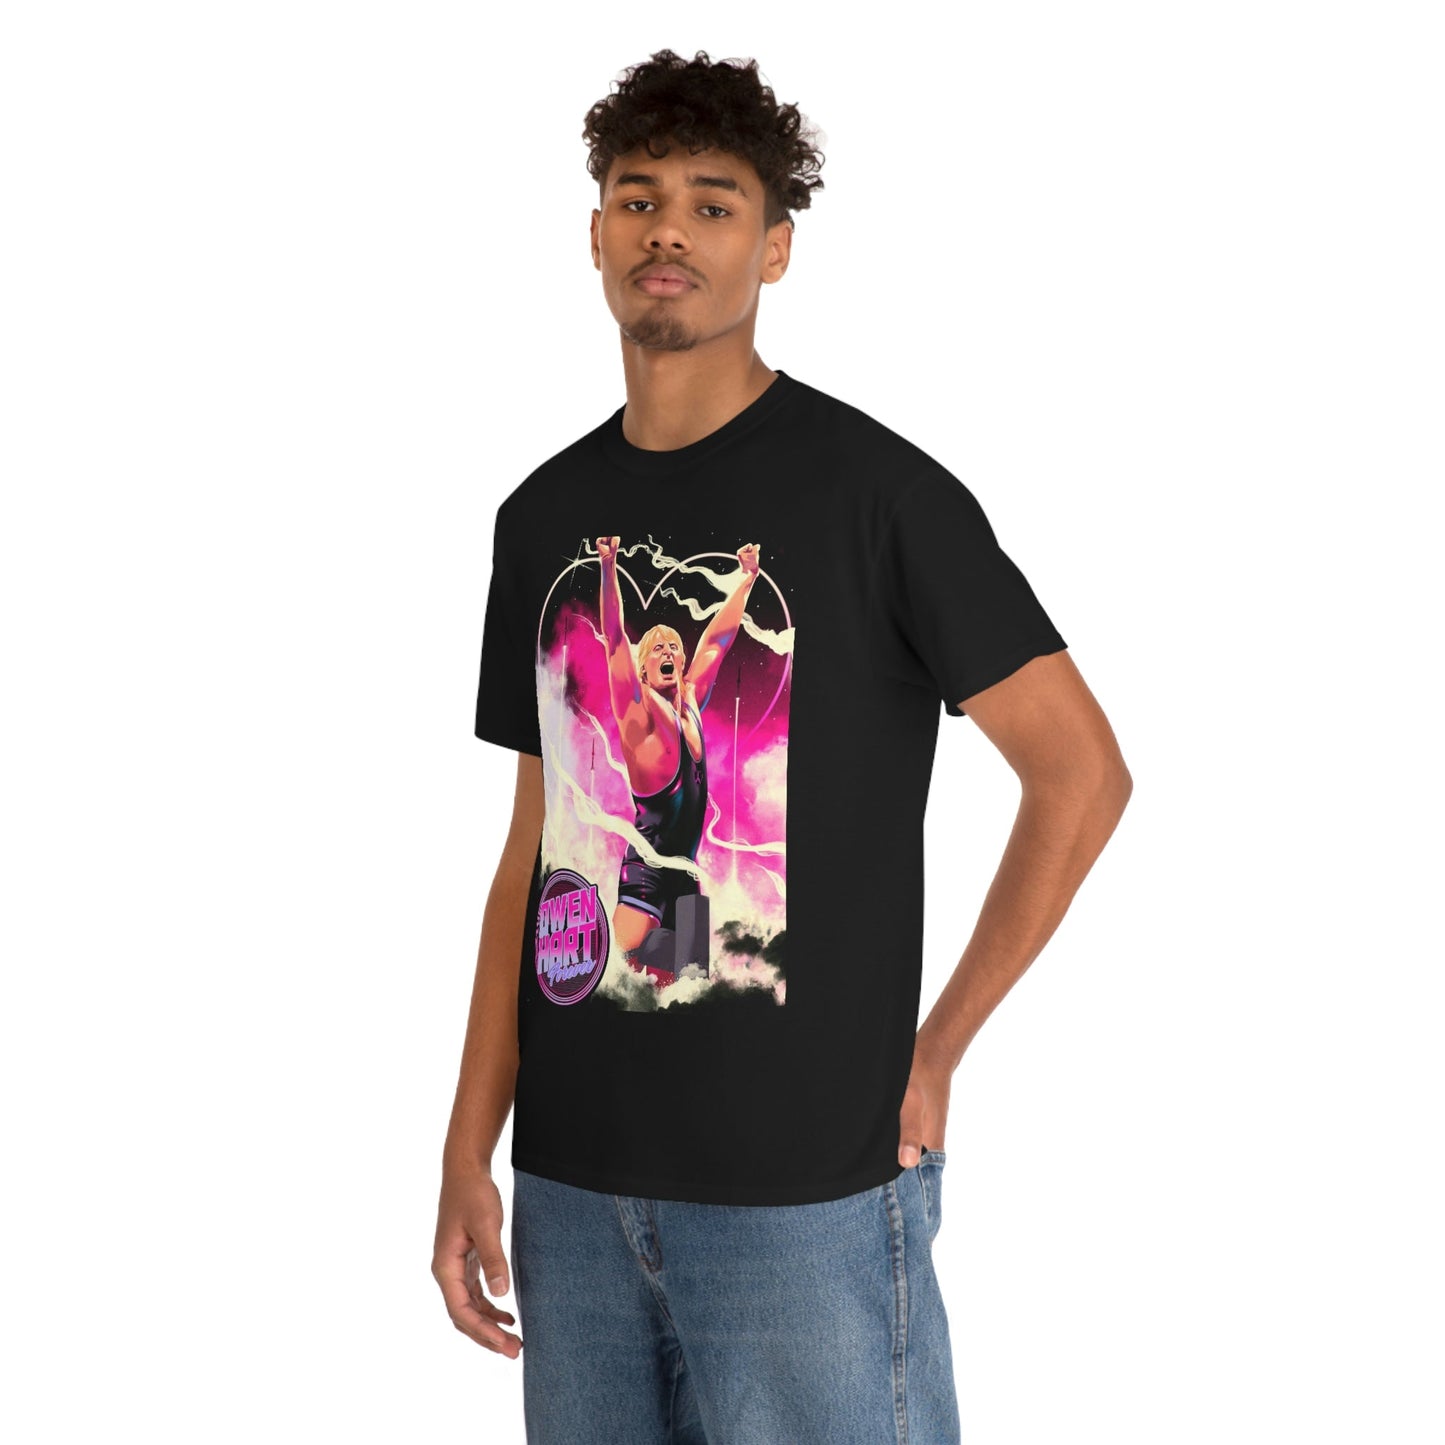 Owen Hart The Rocket T-Shirt - RetroTeeShop